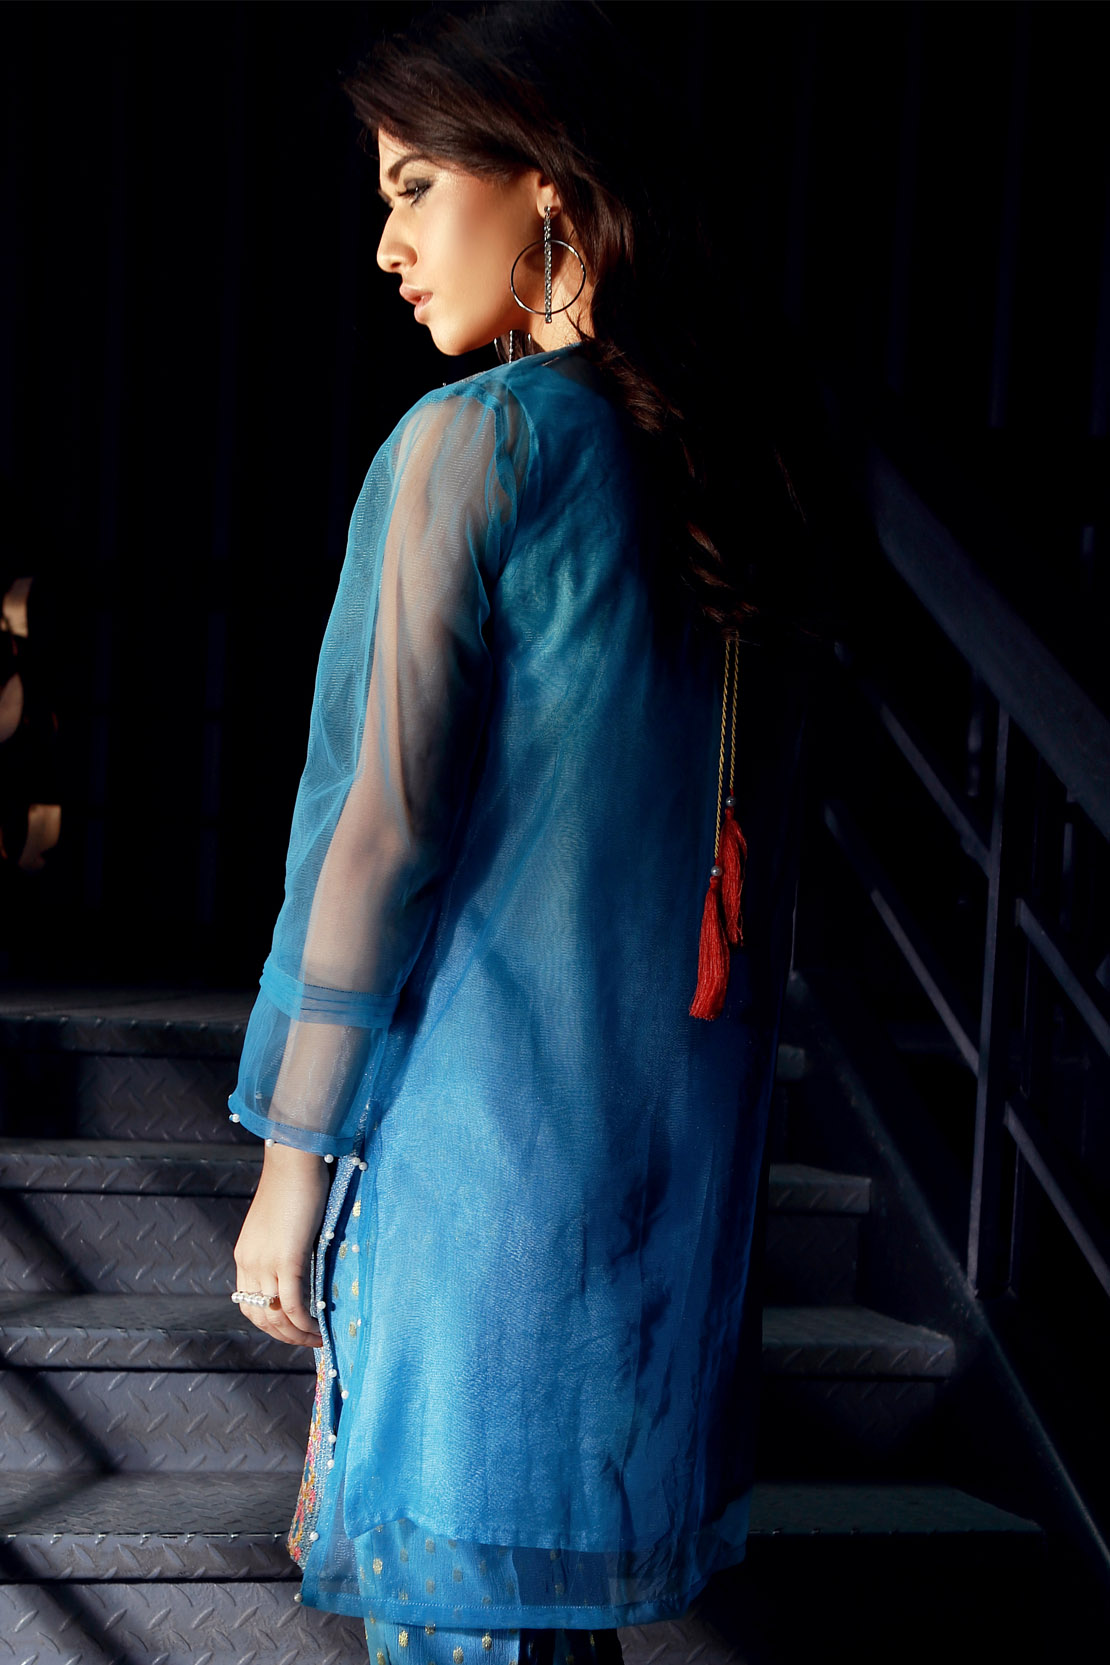 Buy this elegant Pakistani chiffon dress by Warda Saleem on an online platform